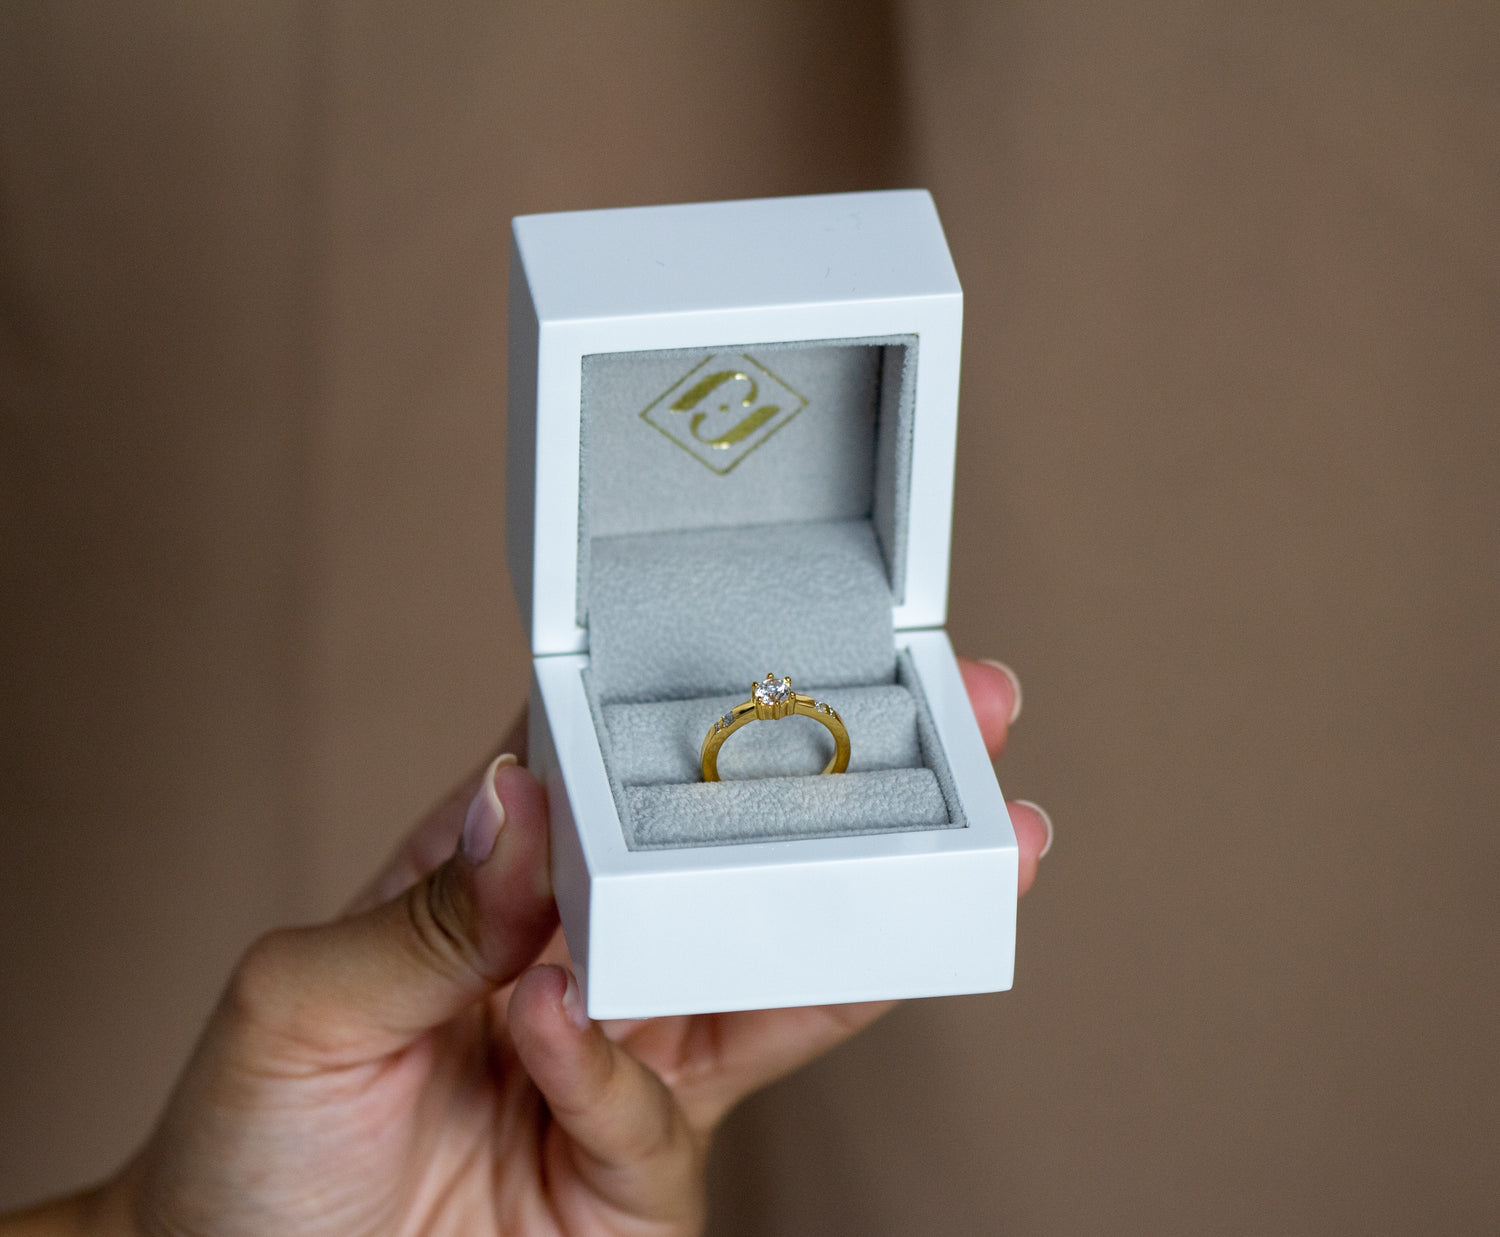 Mae Engagement ring